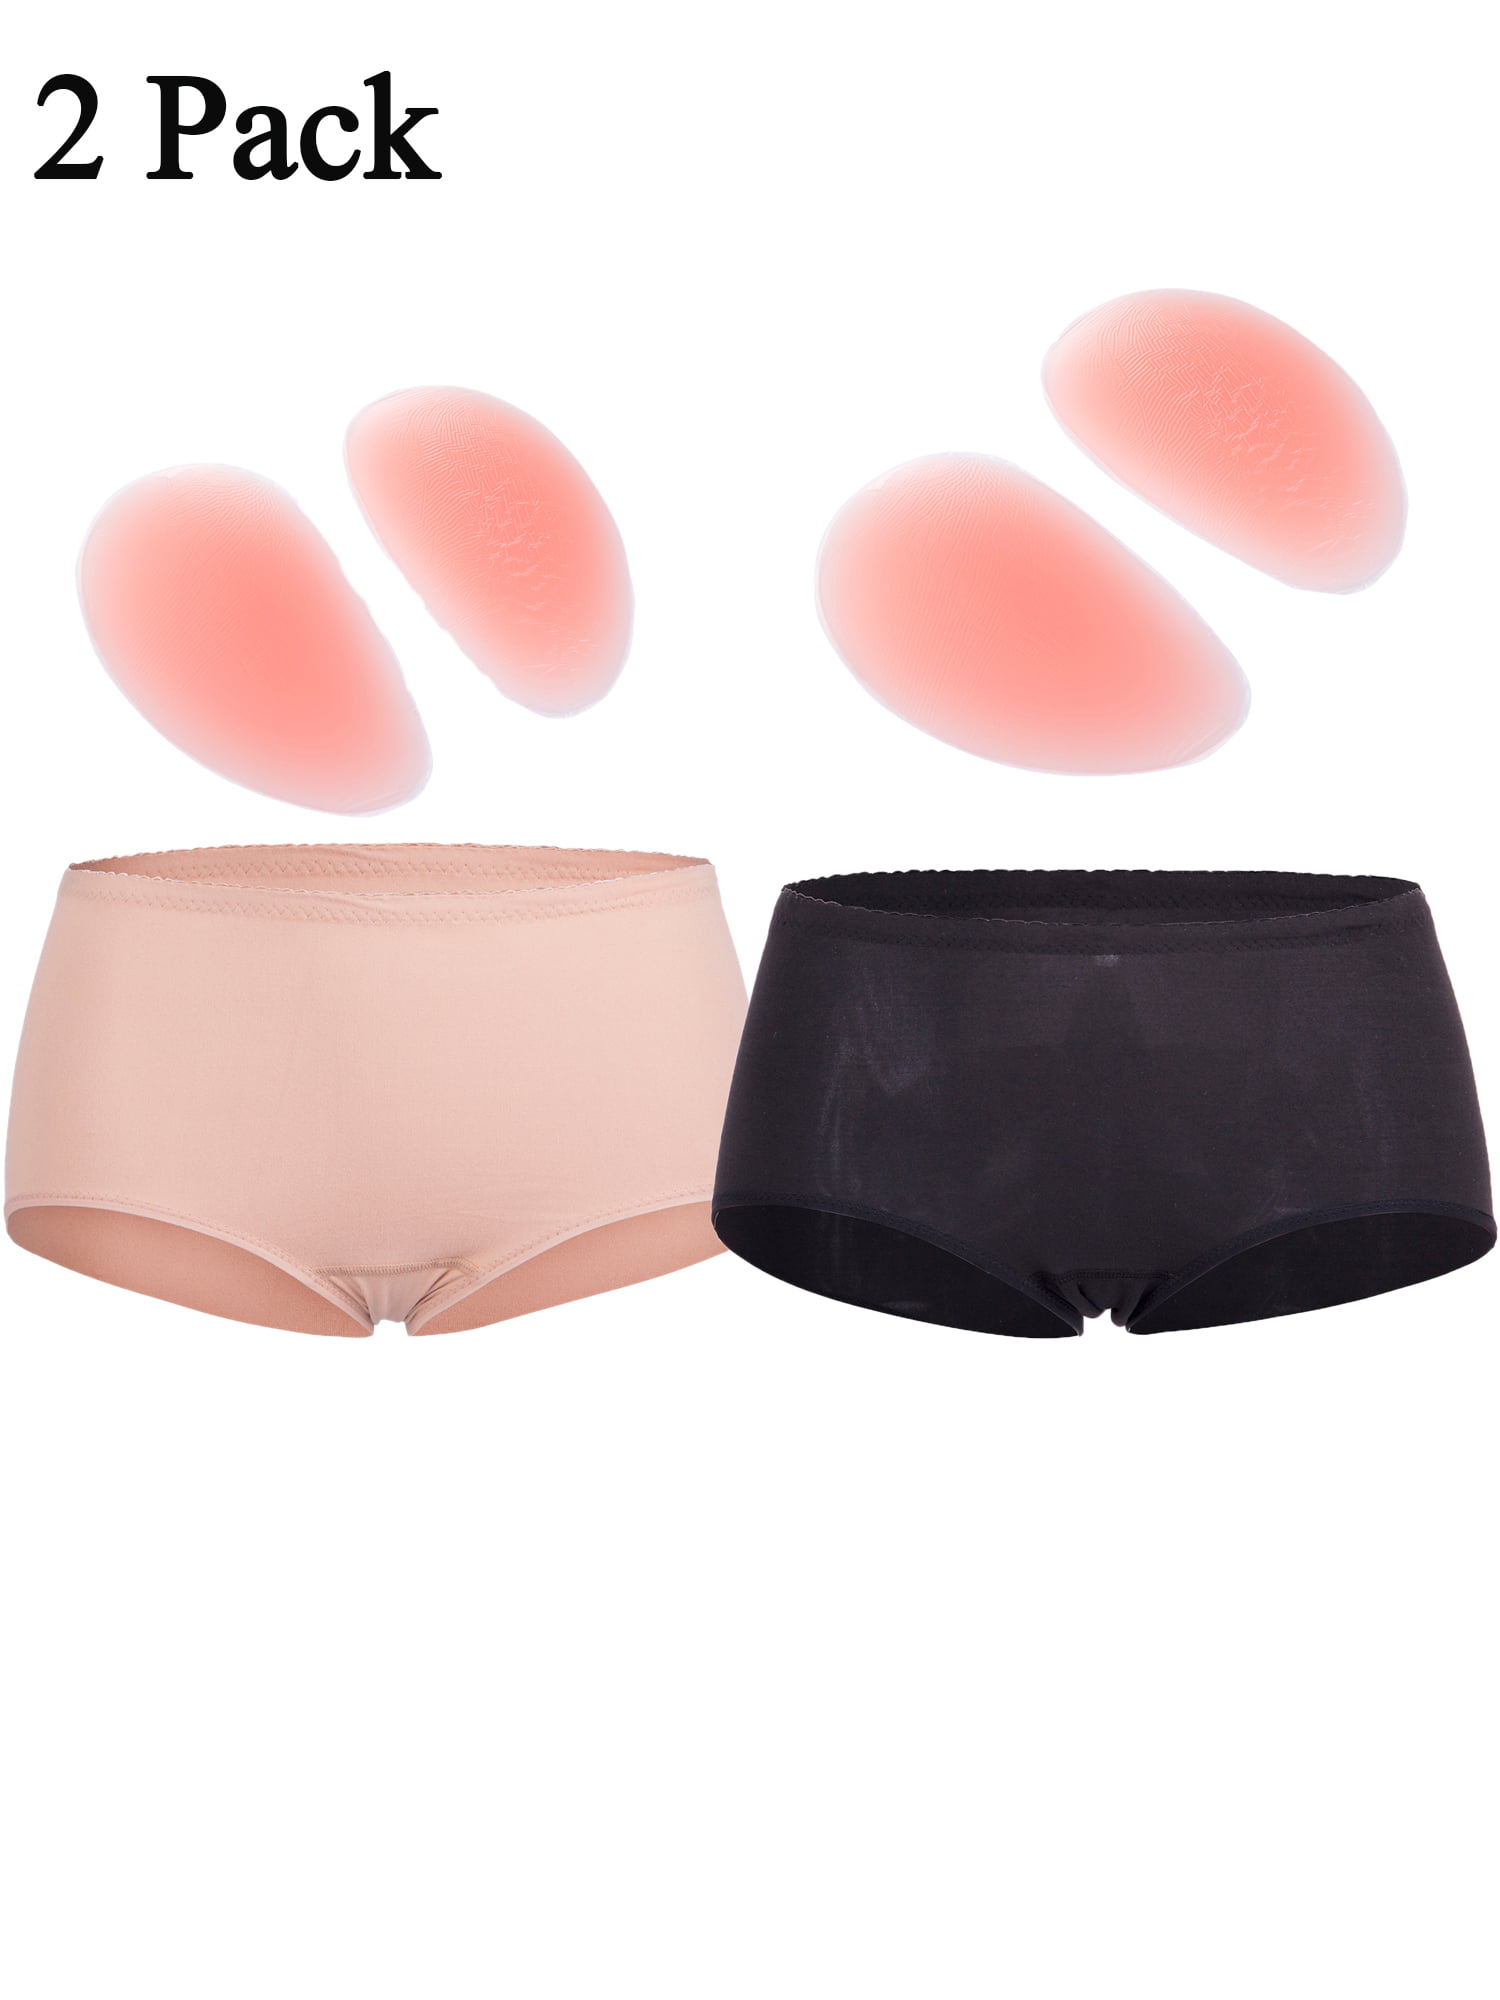 Big Butt Hip Up Silicone Buttocks Pads Enhancer body Shaper GIRDLE Panties #1 